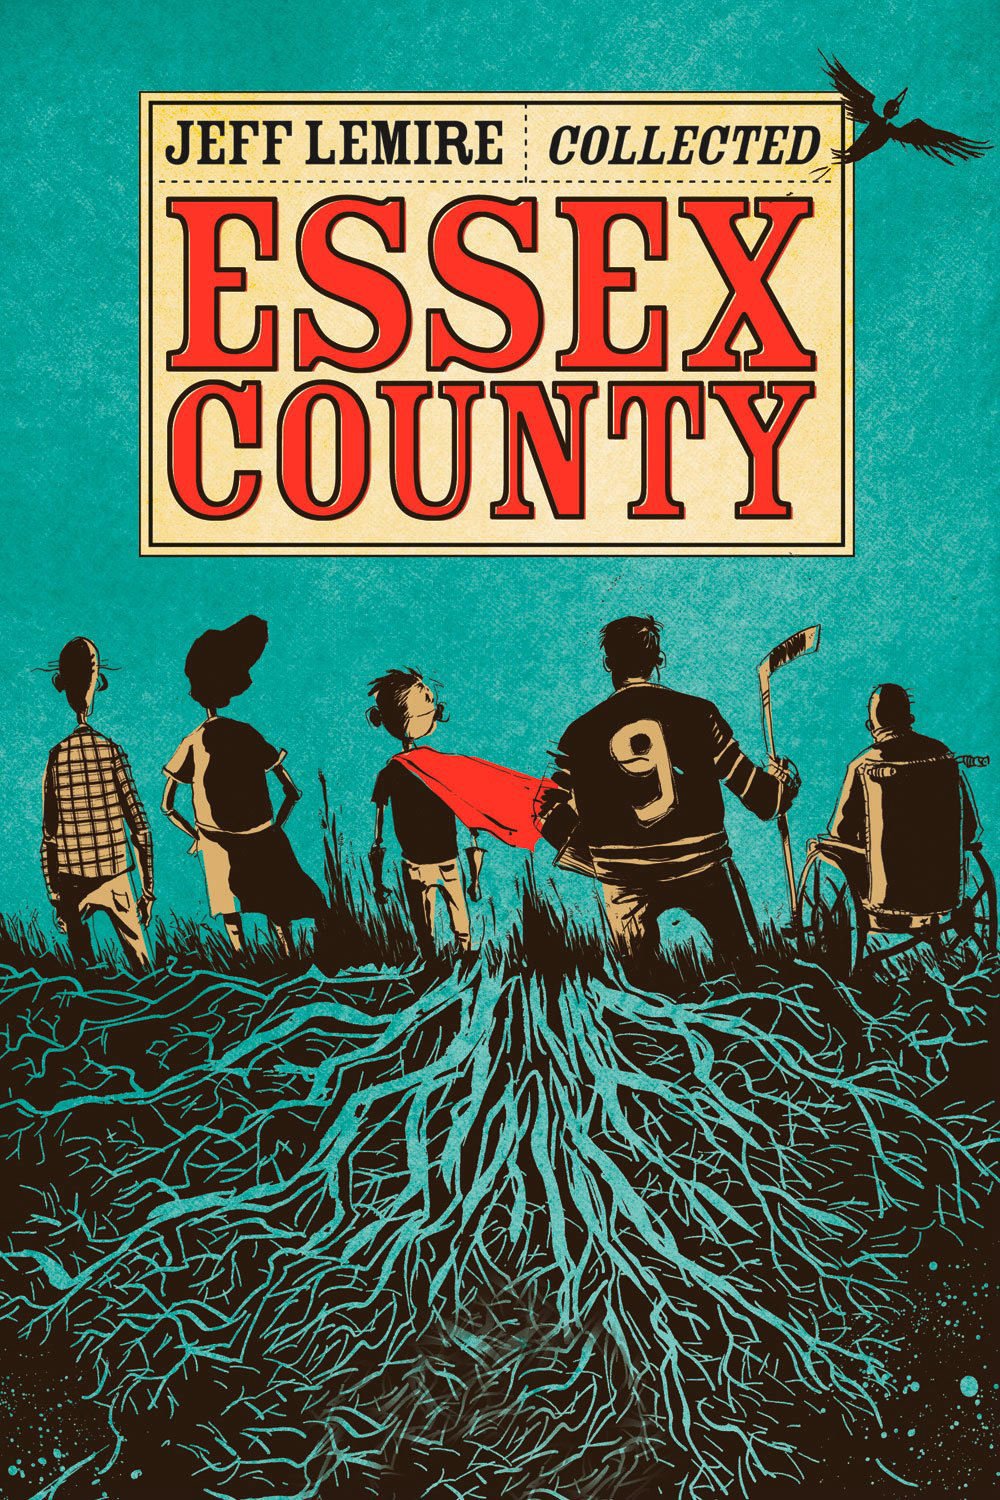 Jeff Lemire's Haunting Essex County Trilogy